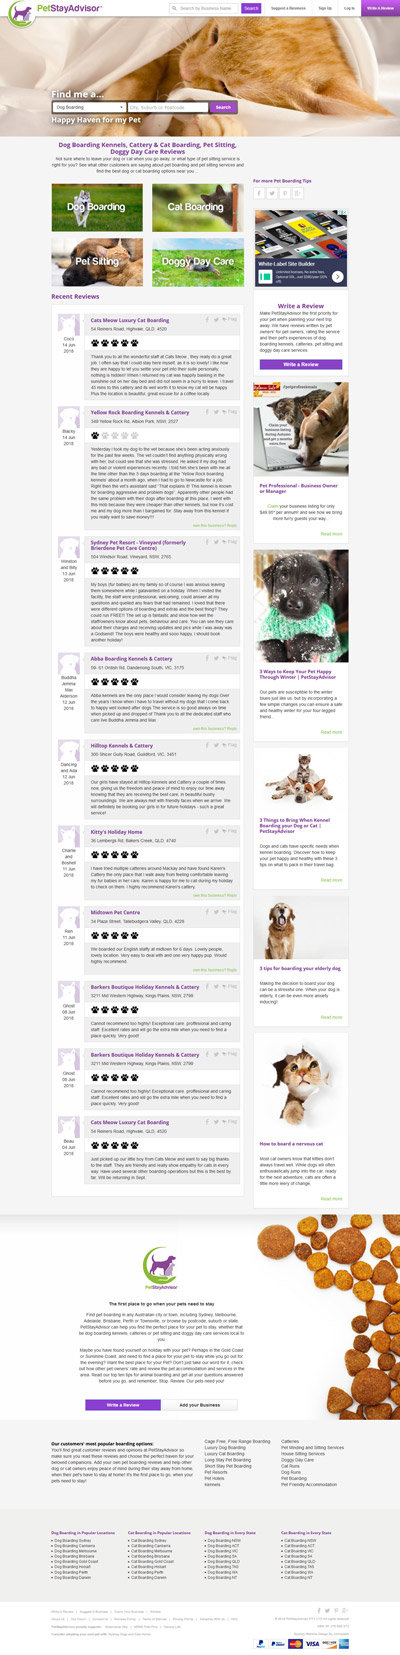 Pet Stay Advisor - Web Design Case Study